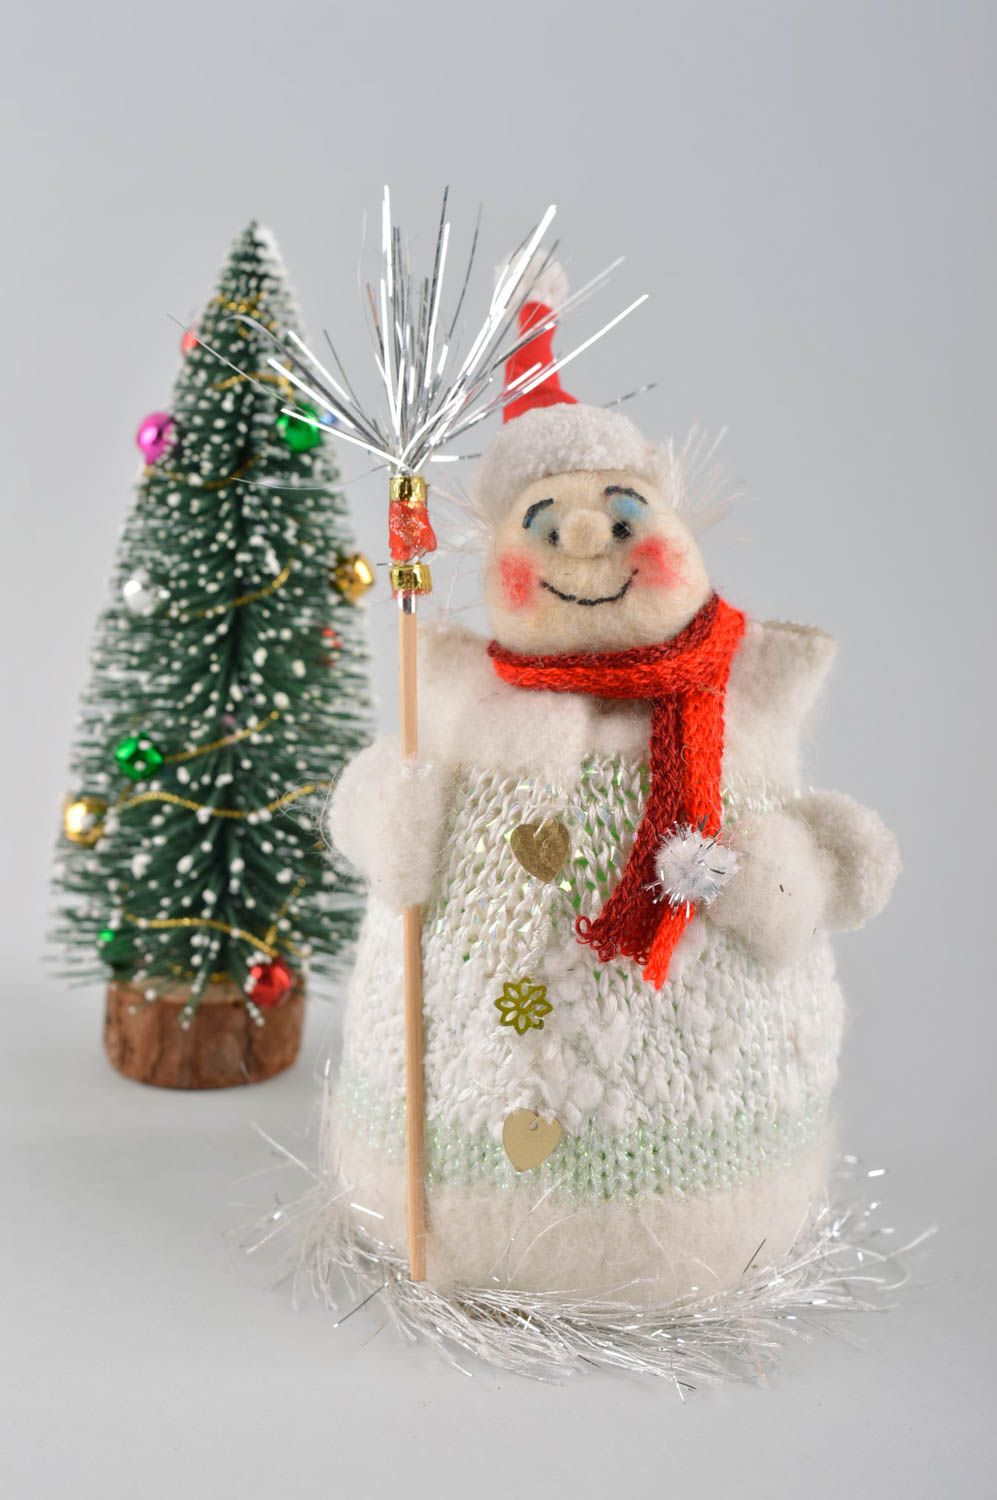 Handmade unusual festive toy Christmas home decor stylish New Year figurine photo 1